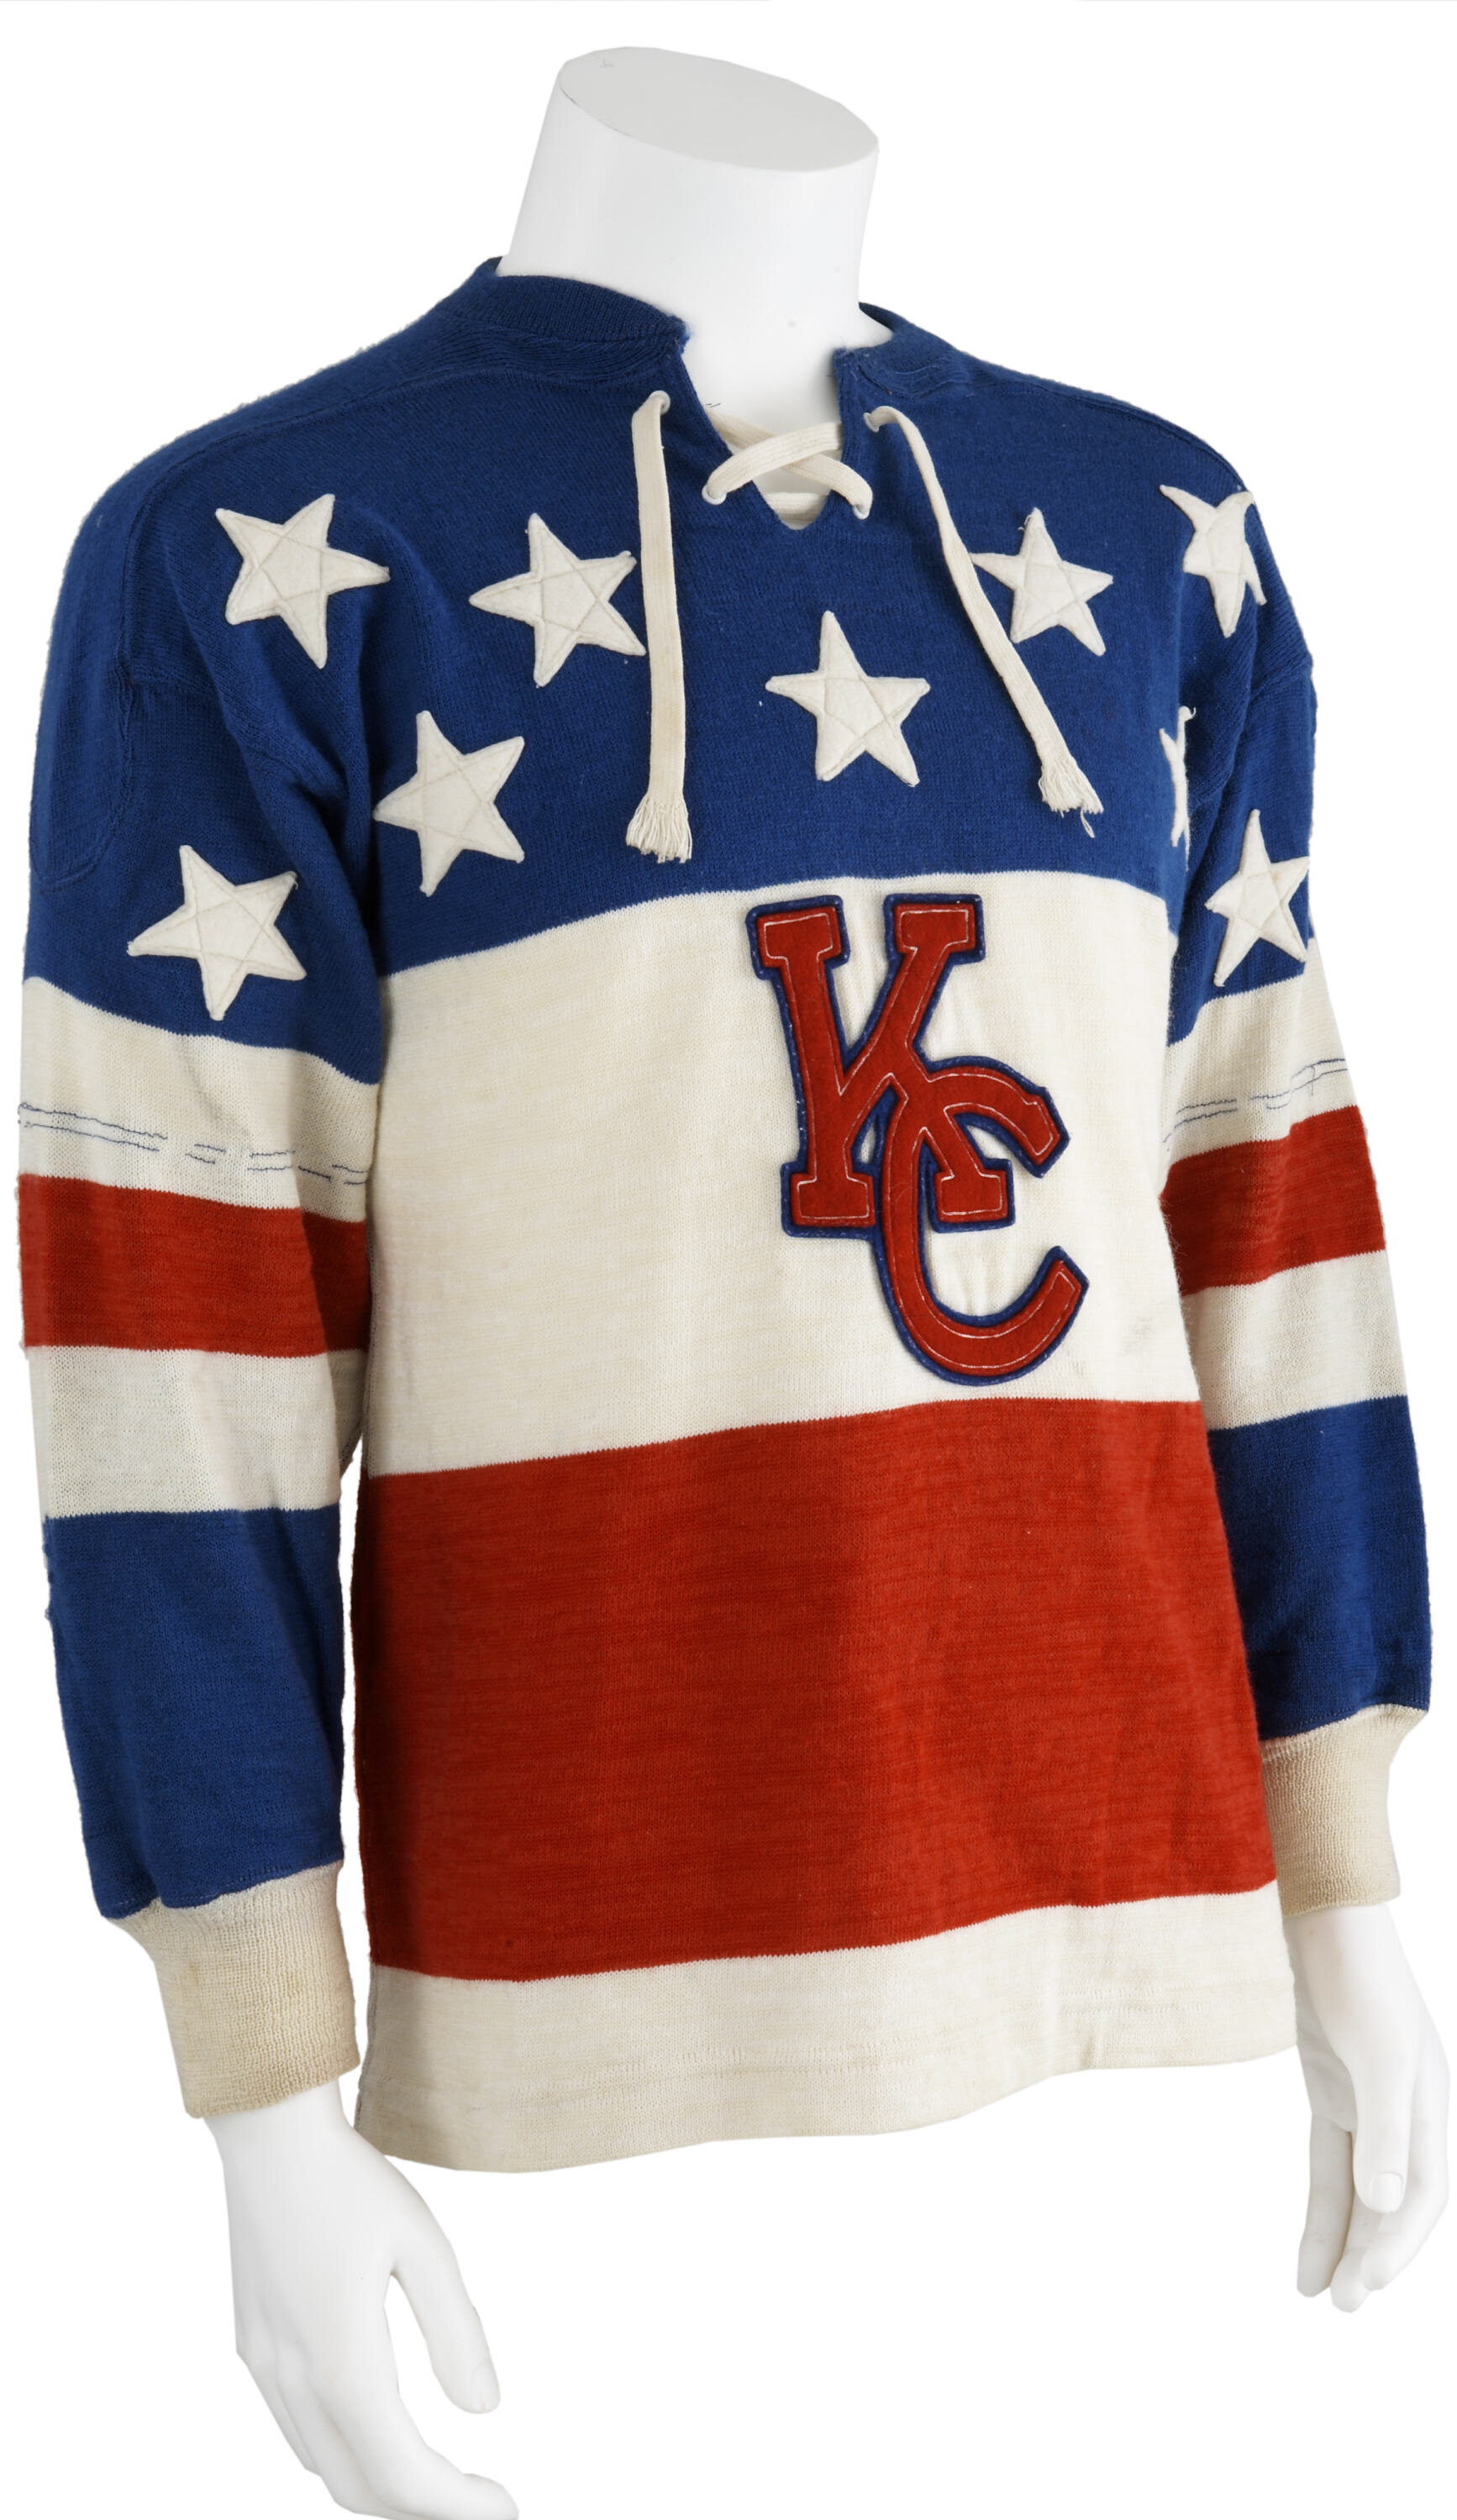 Kansas City Pla-Mors vintage hockey jersey